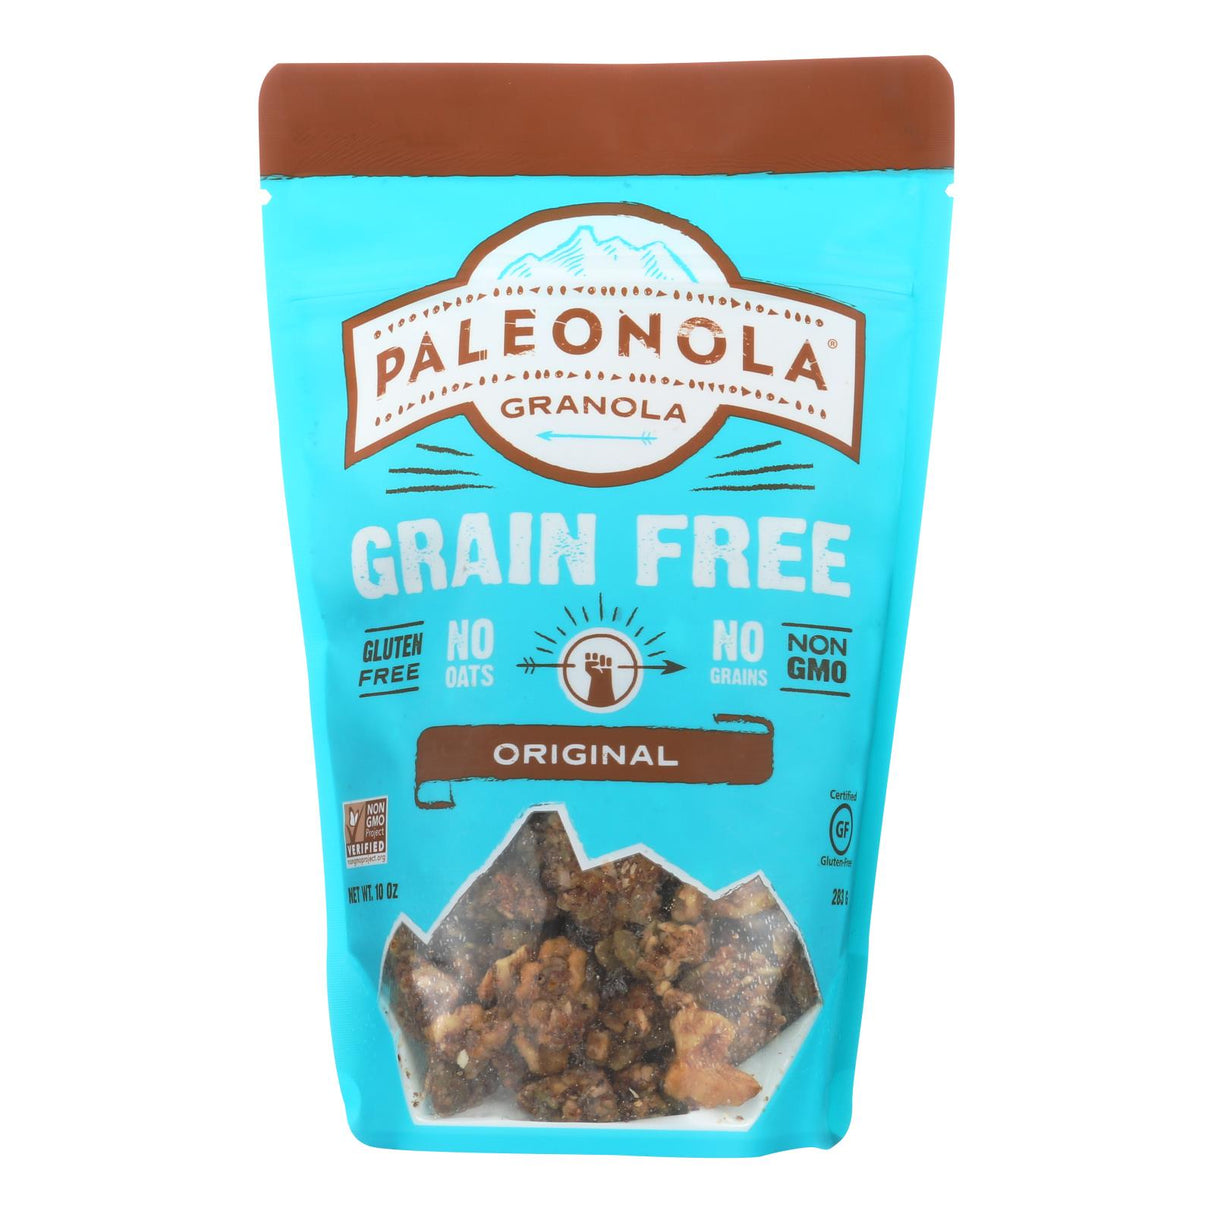 Paleonola Paleo Granola Original Flavor 6 Pack (10 Oz. Each) - Cozy Farm 